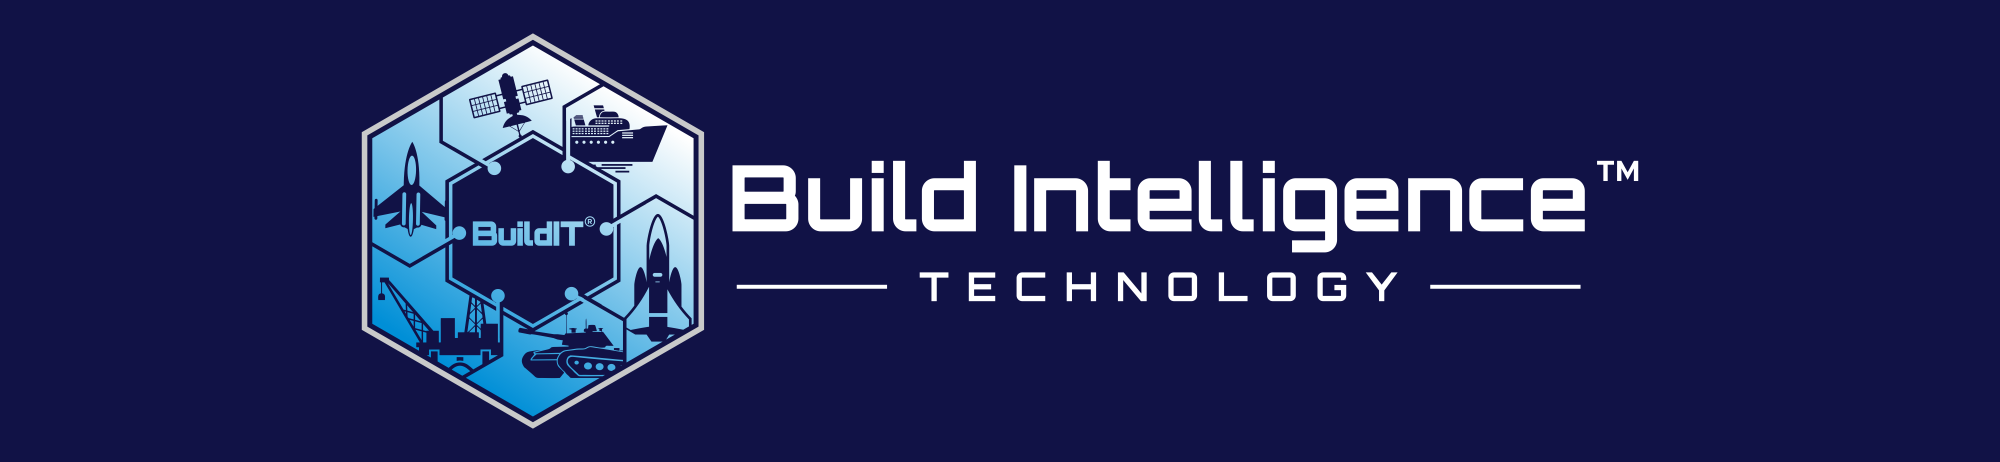 Build Intelligence TechnologyPPT Header